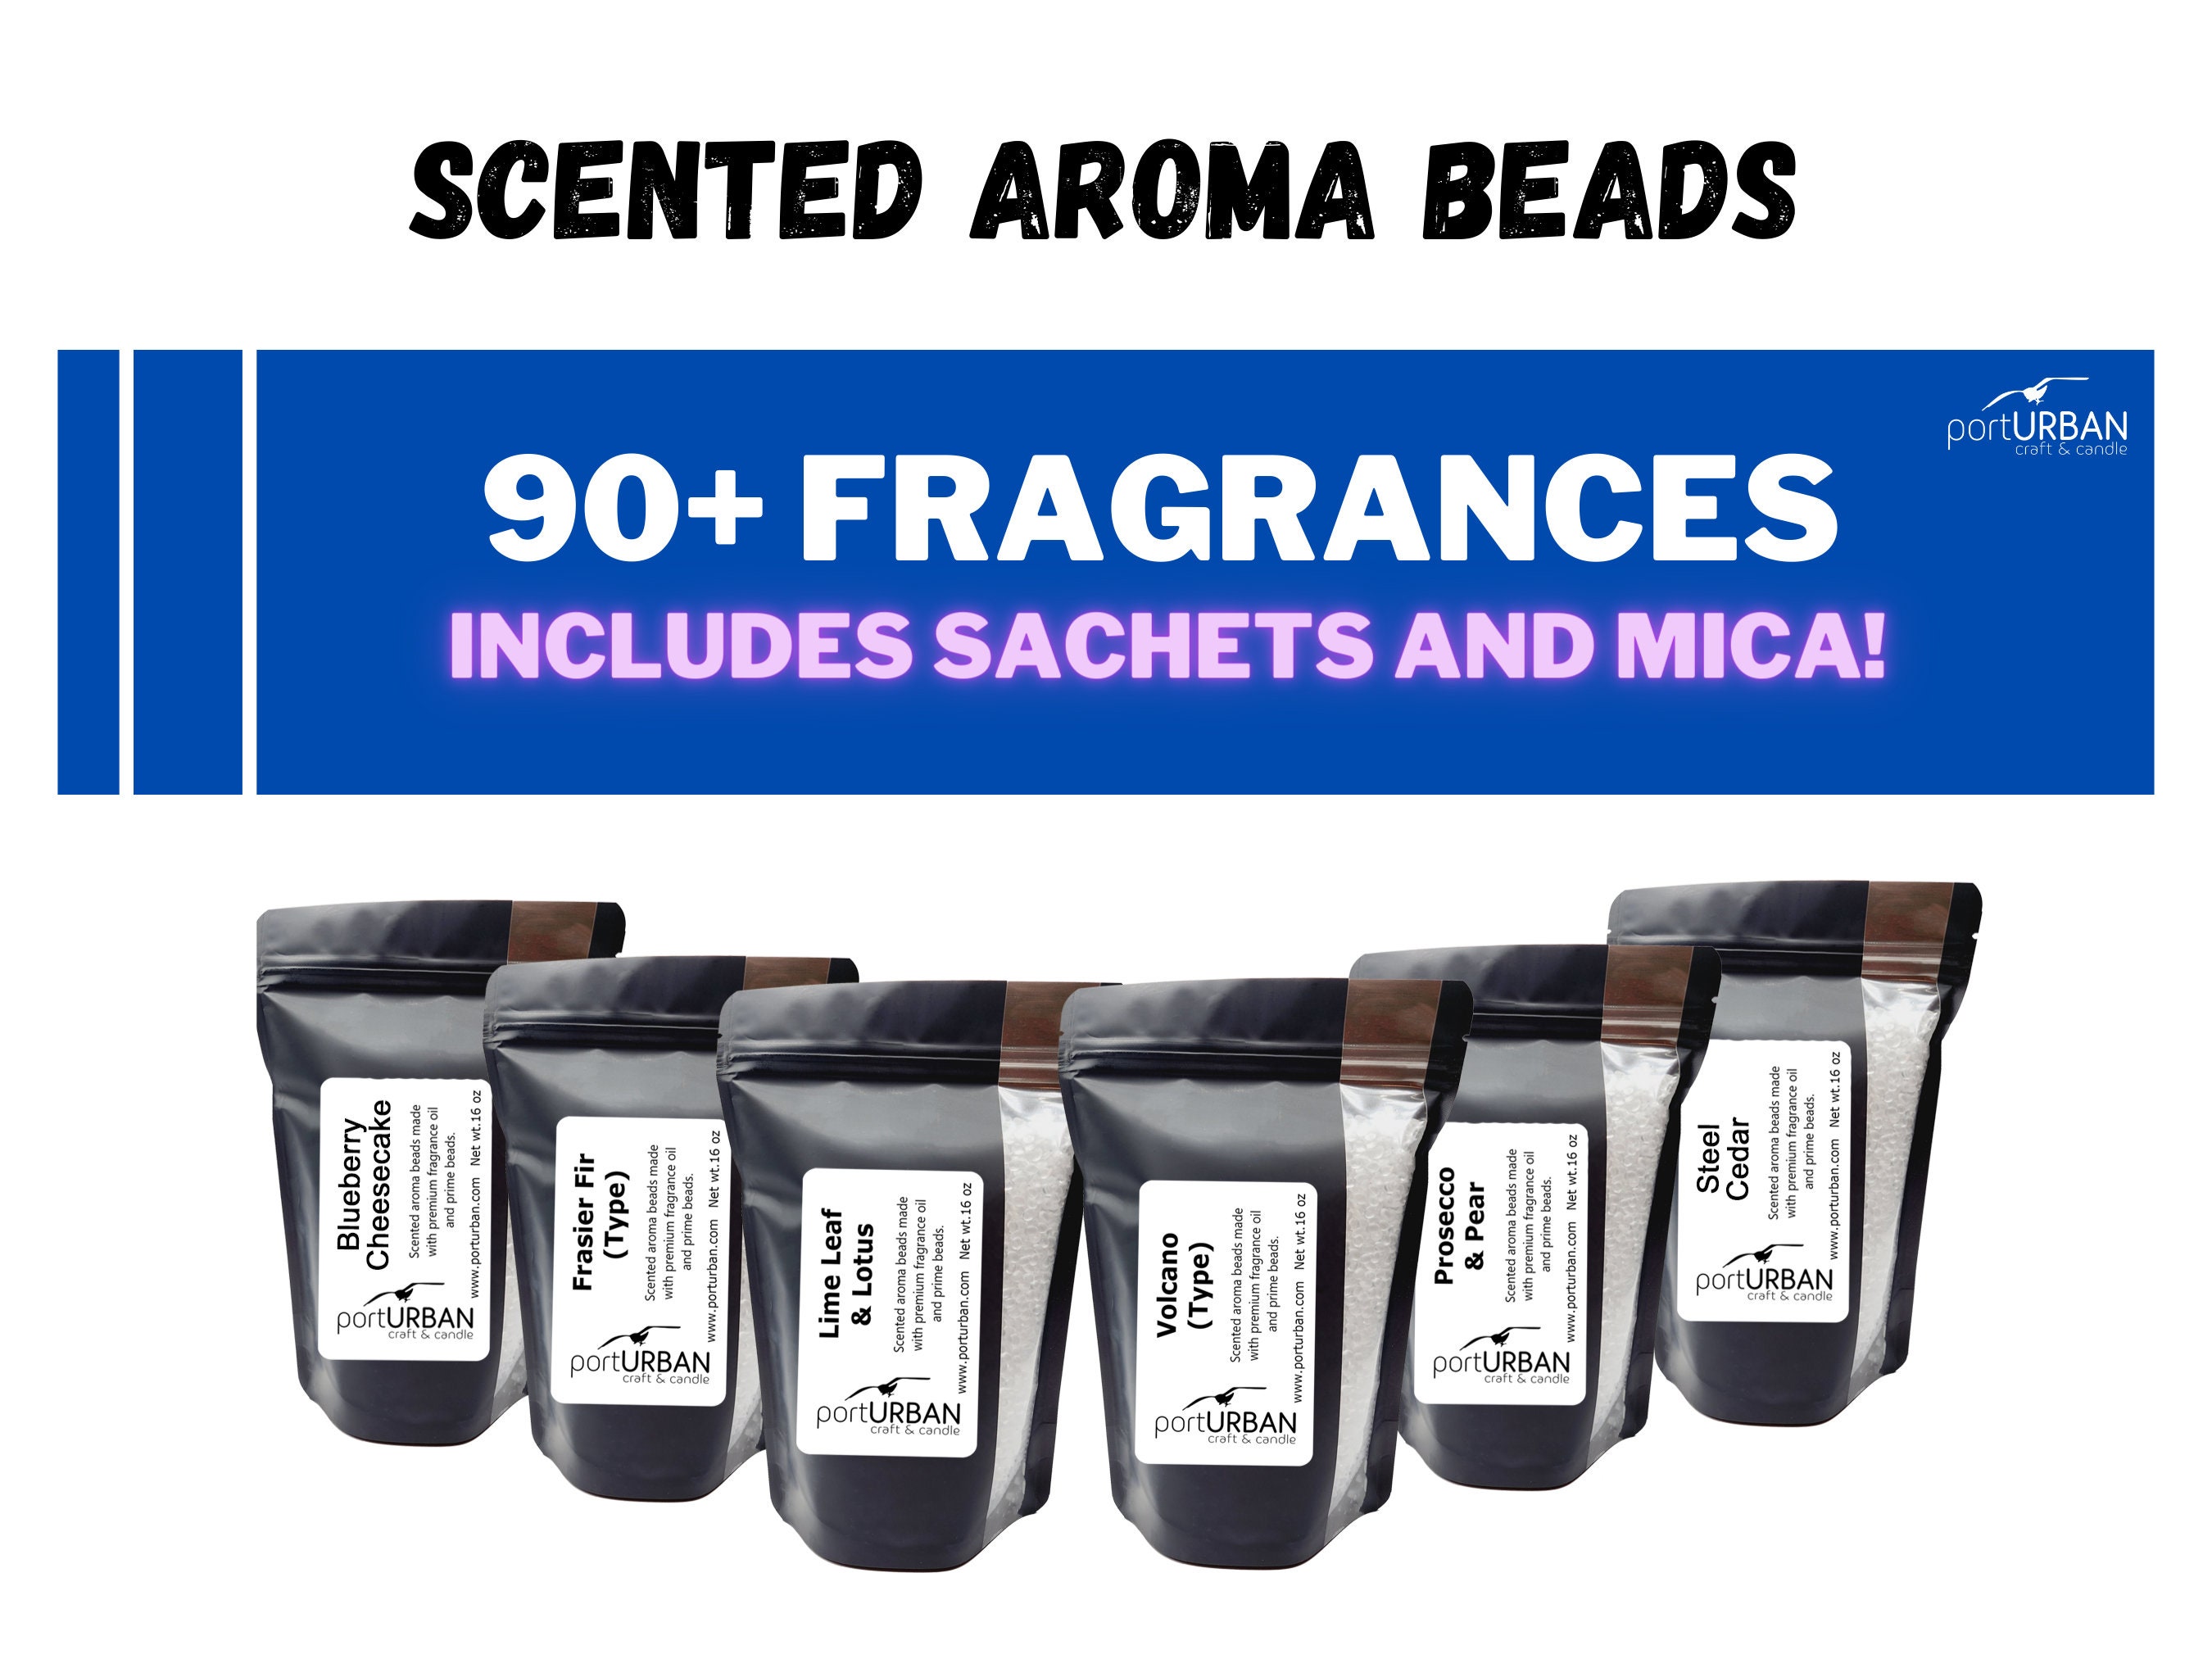 Scented Aroma Beads Cured Aroma Beads Premium Aroma Beads 